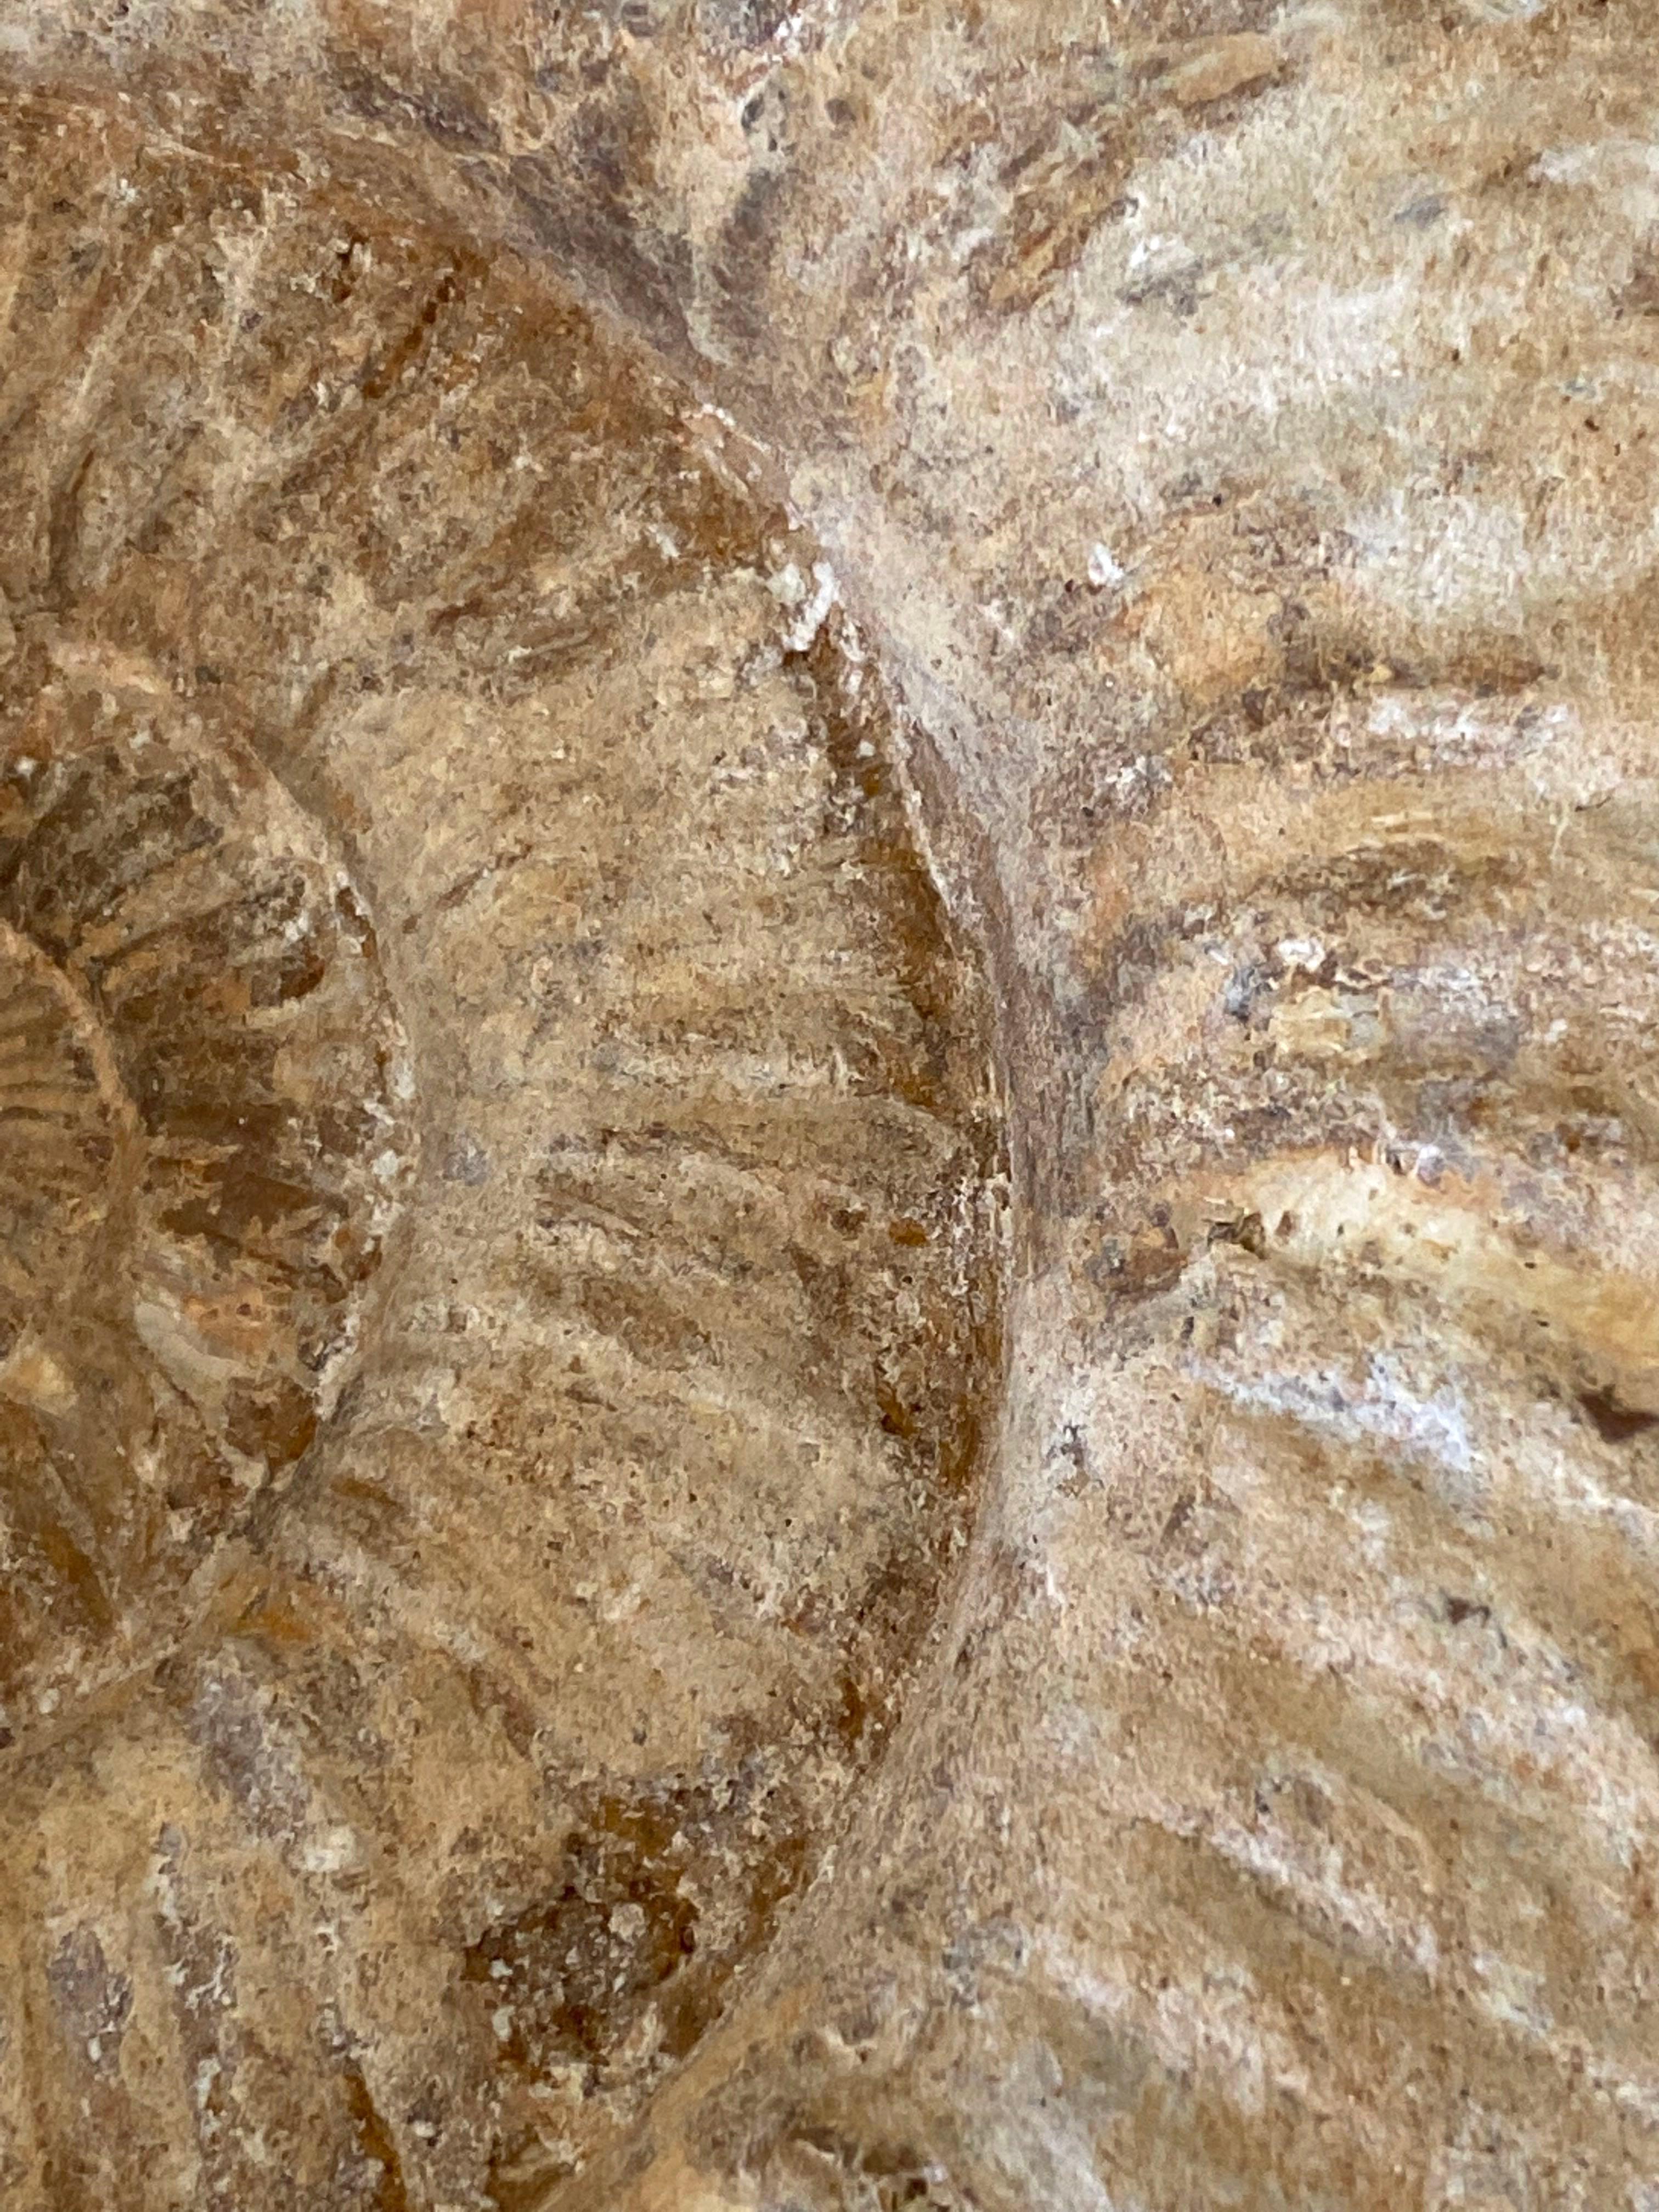 giant ammonite fossil